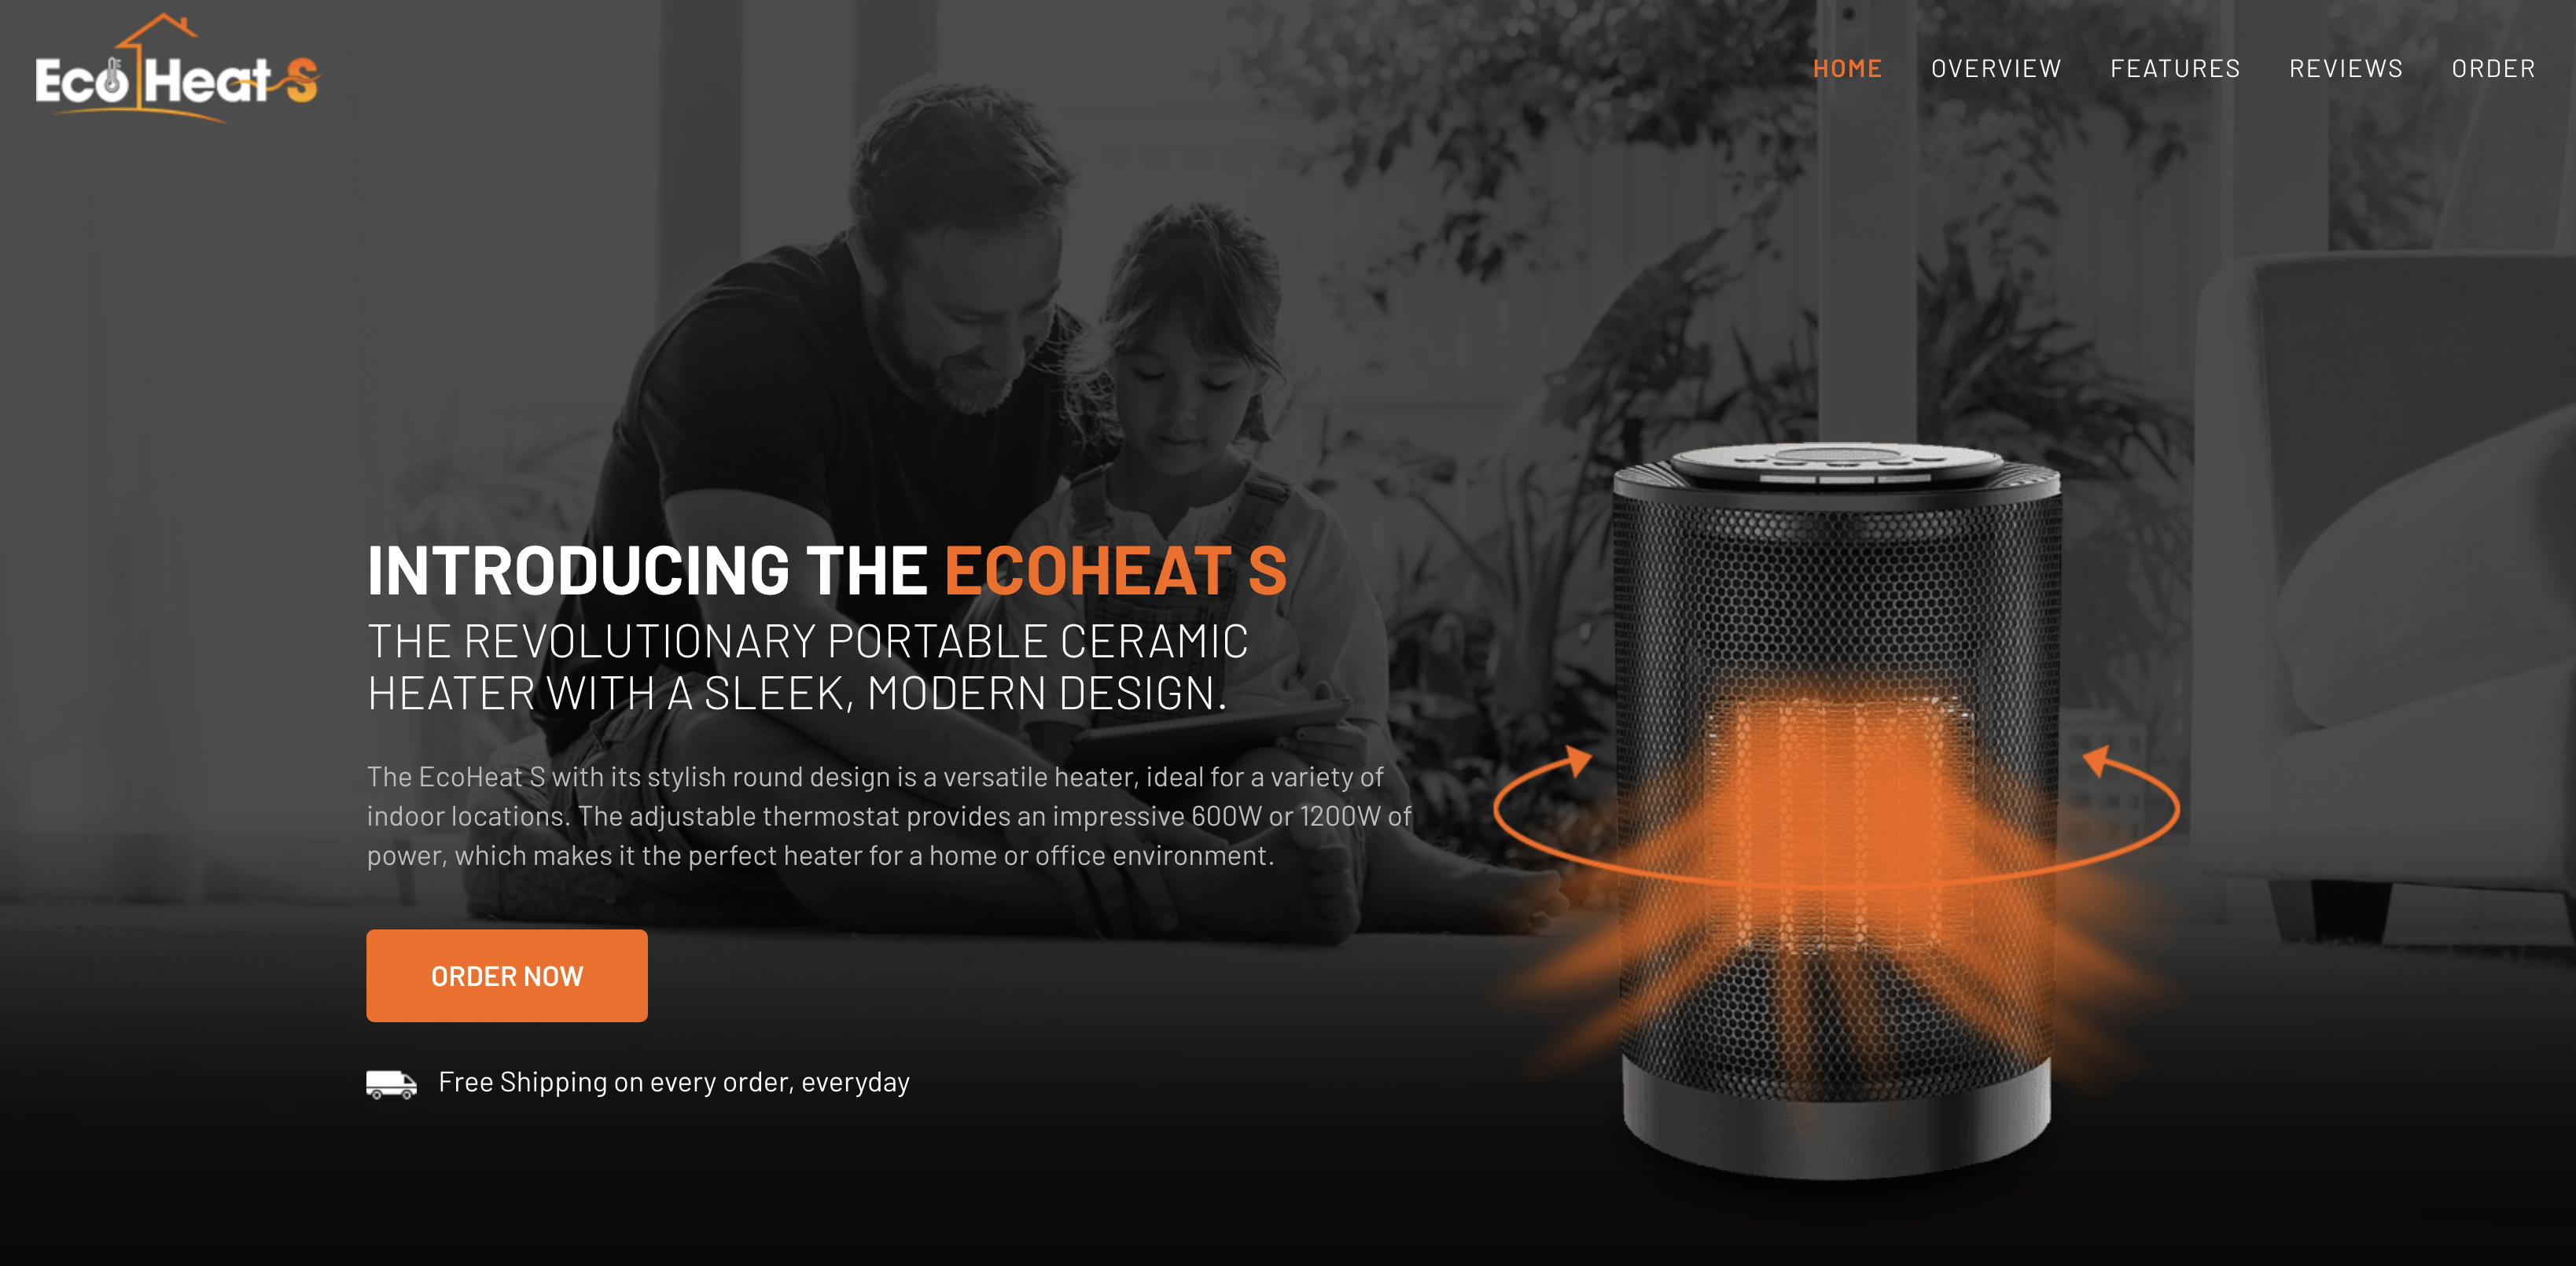 Ecoheat heater featured image